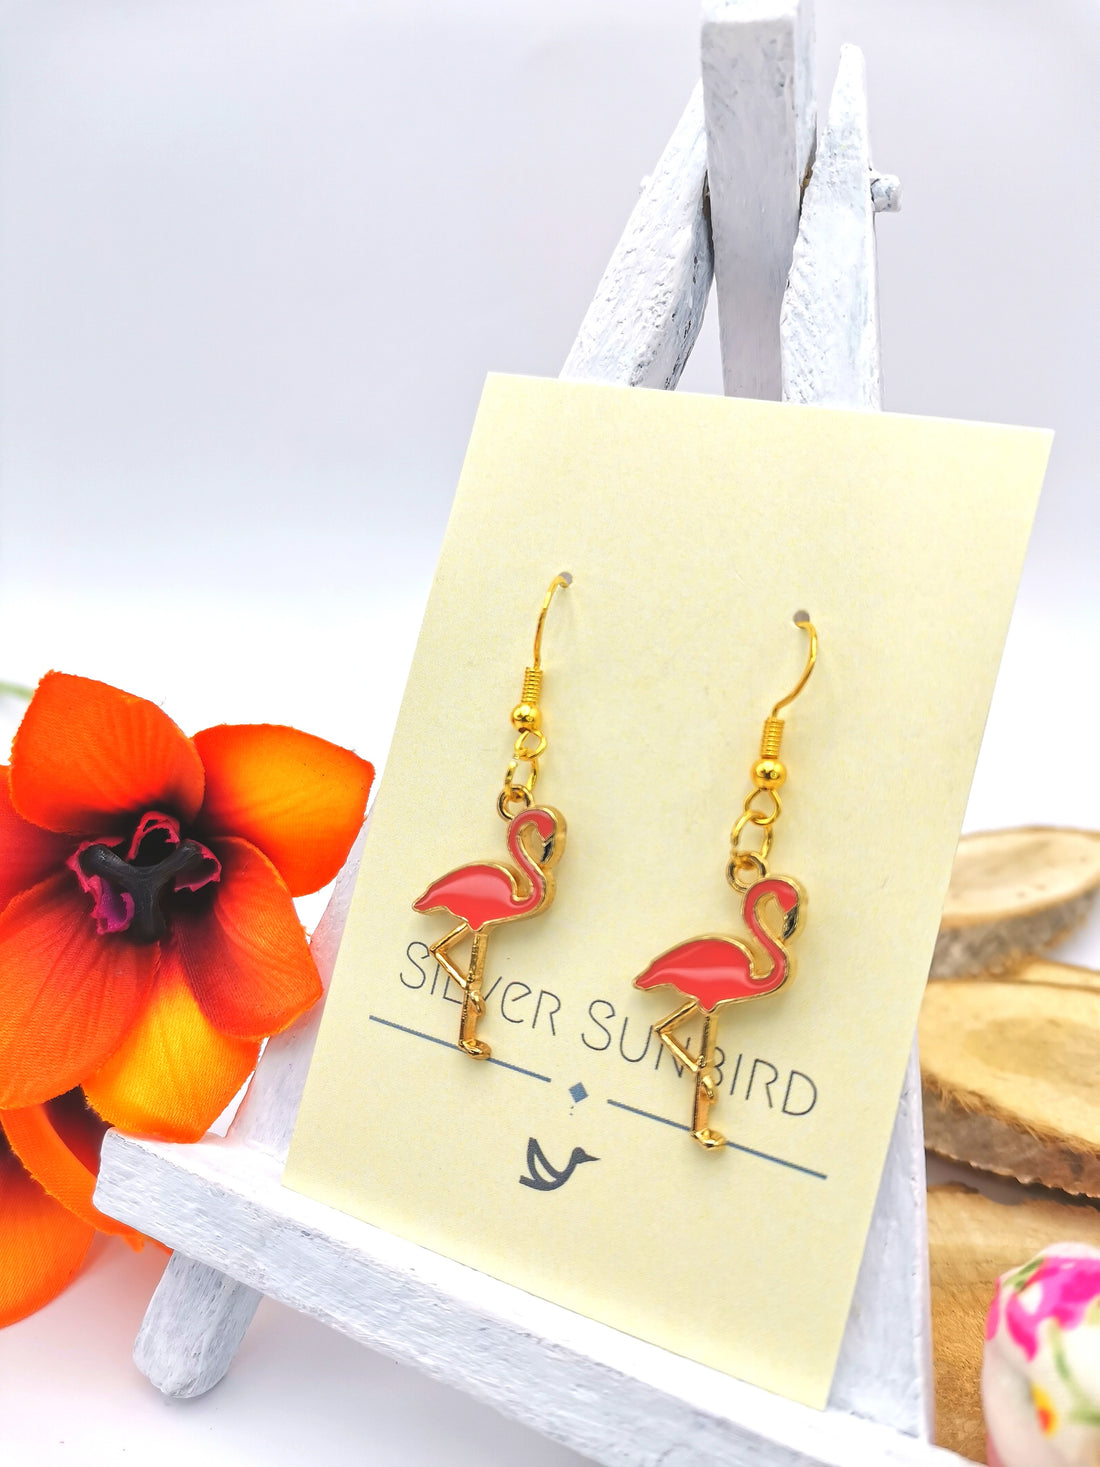 Dancing Flamingo Earrings - Silver Sunbird animal earrings